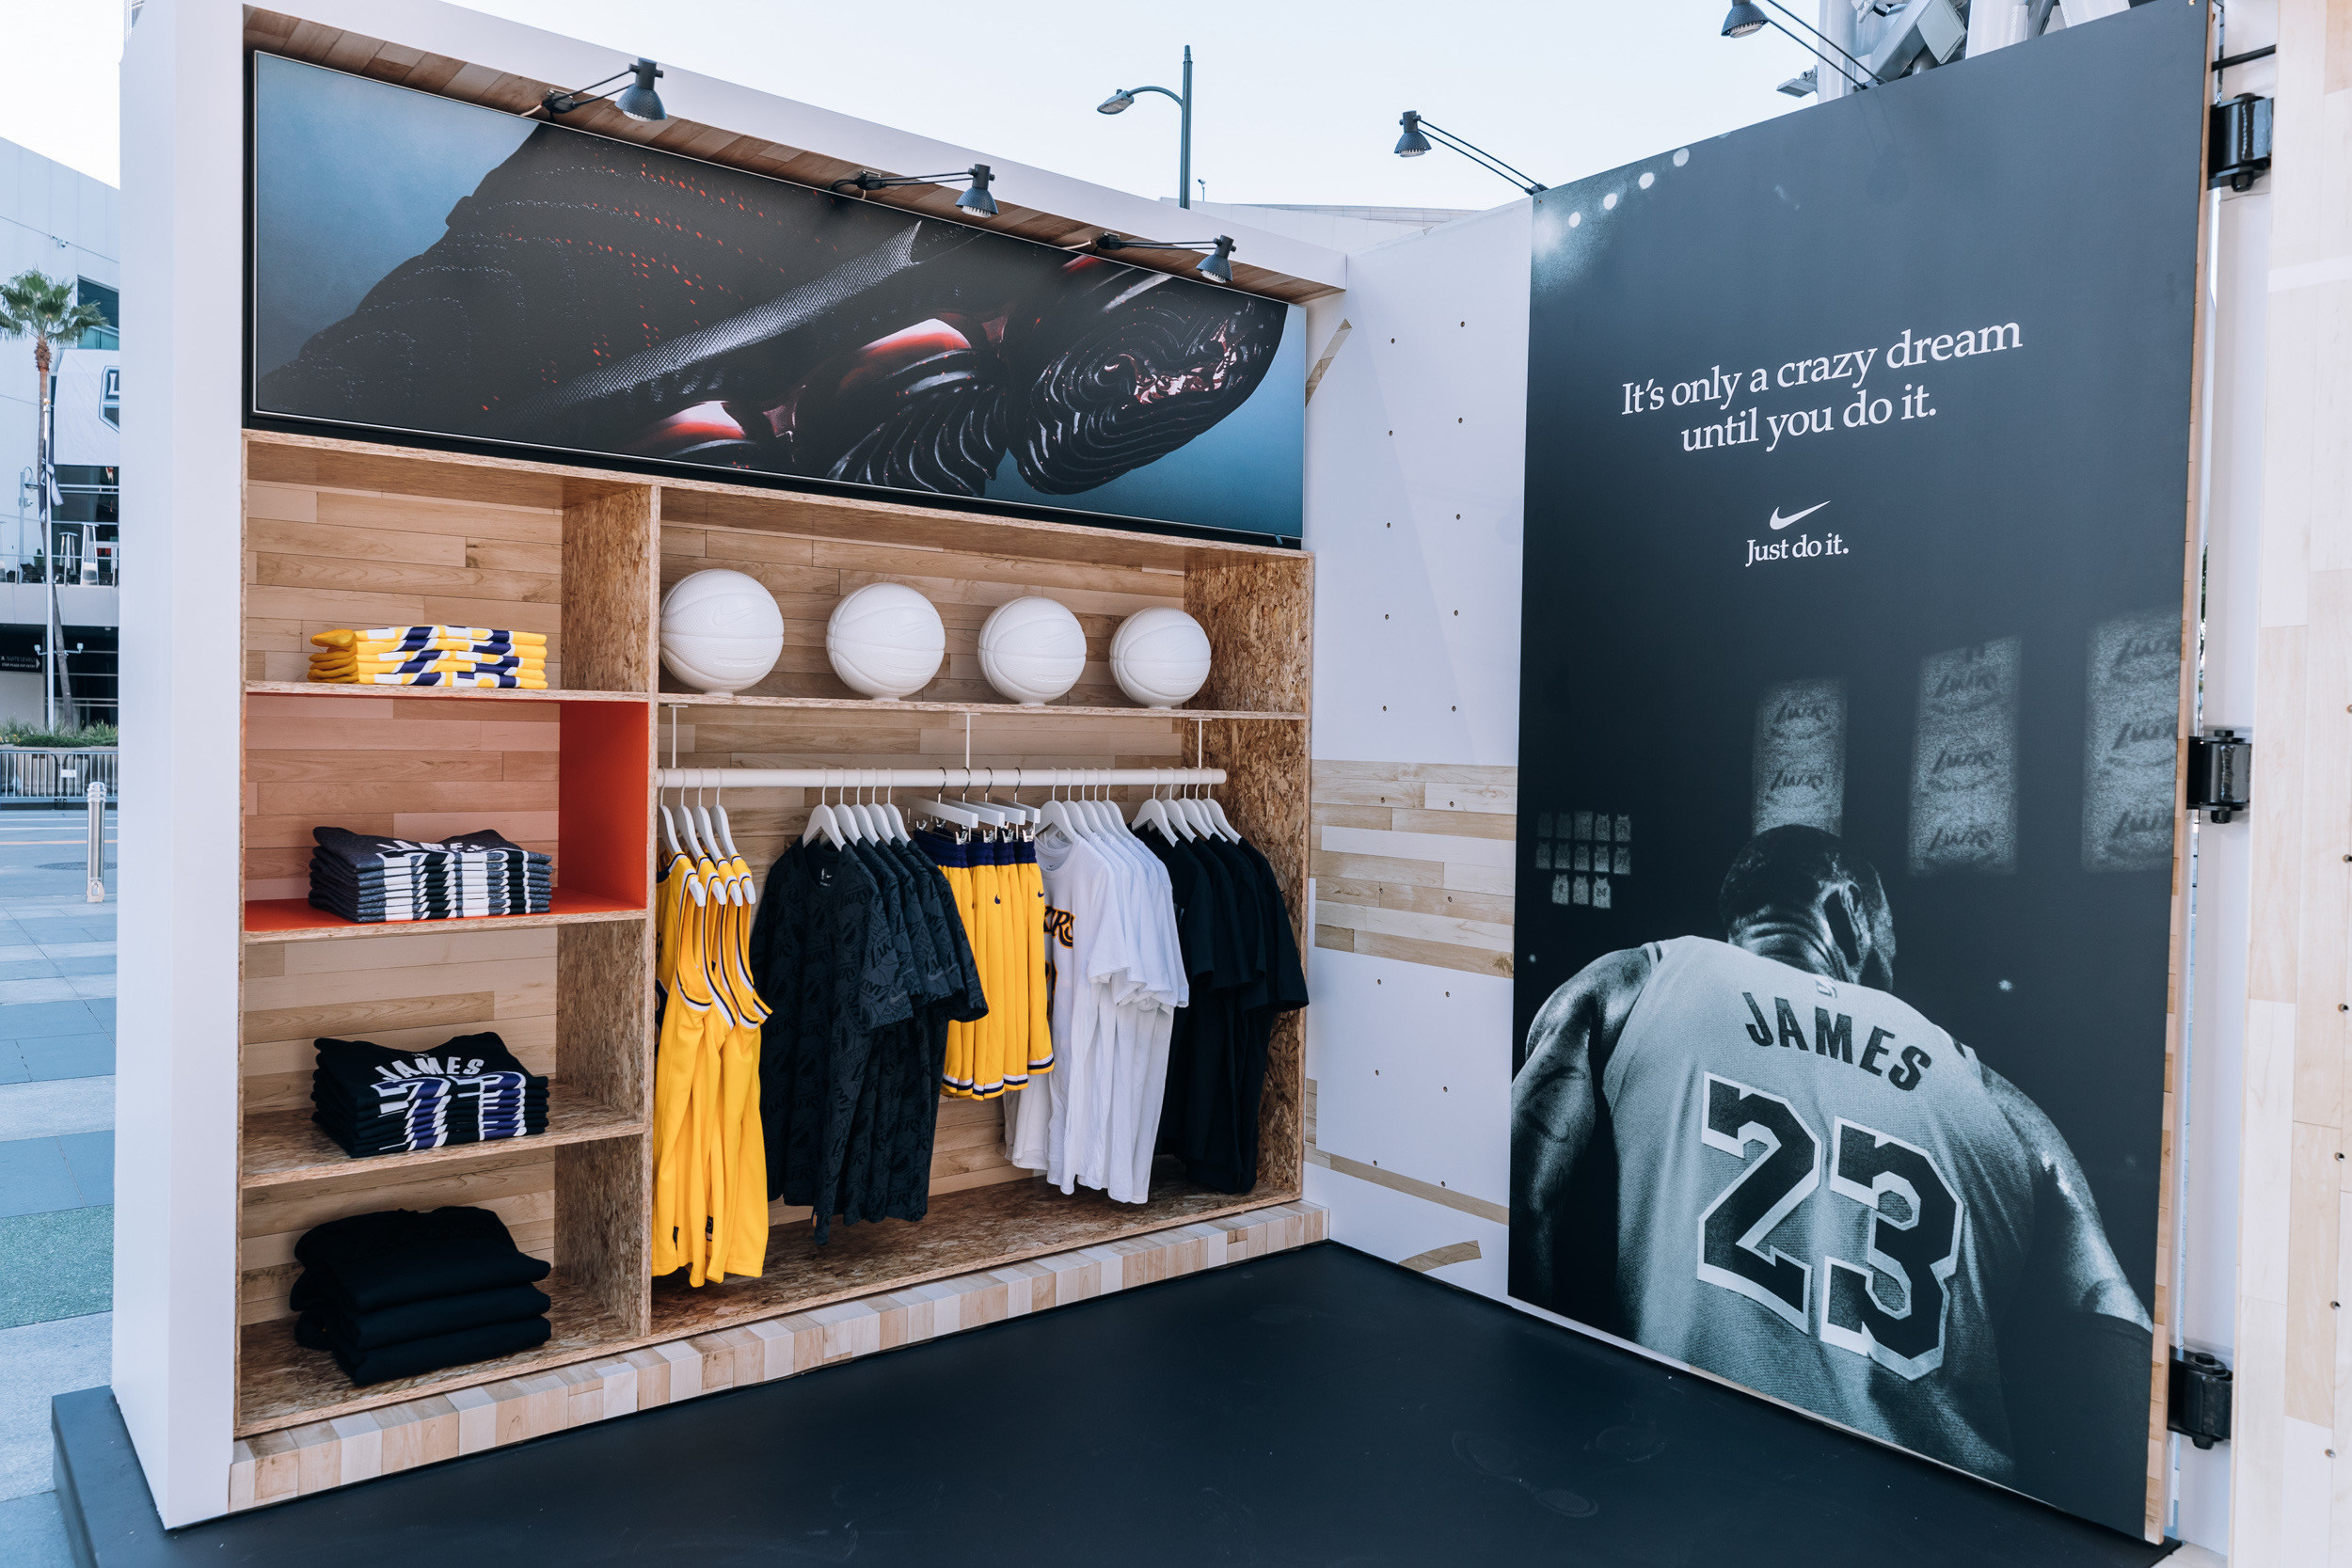 Louis Vuitton Takes Virtual Shopping to MSG With Their NBA Capsule